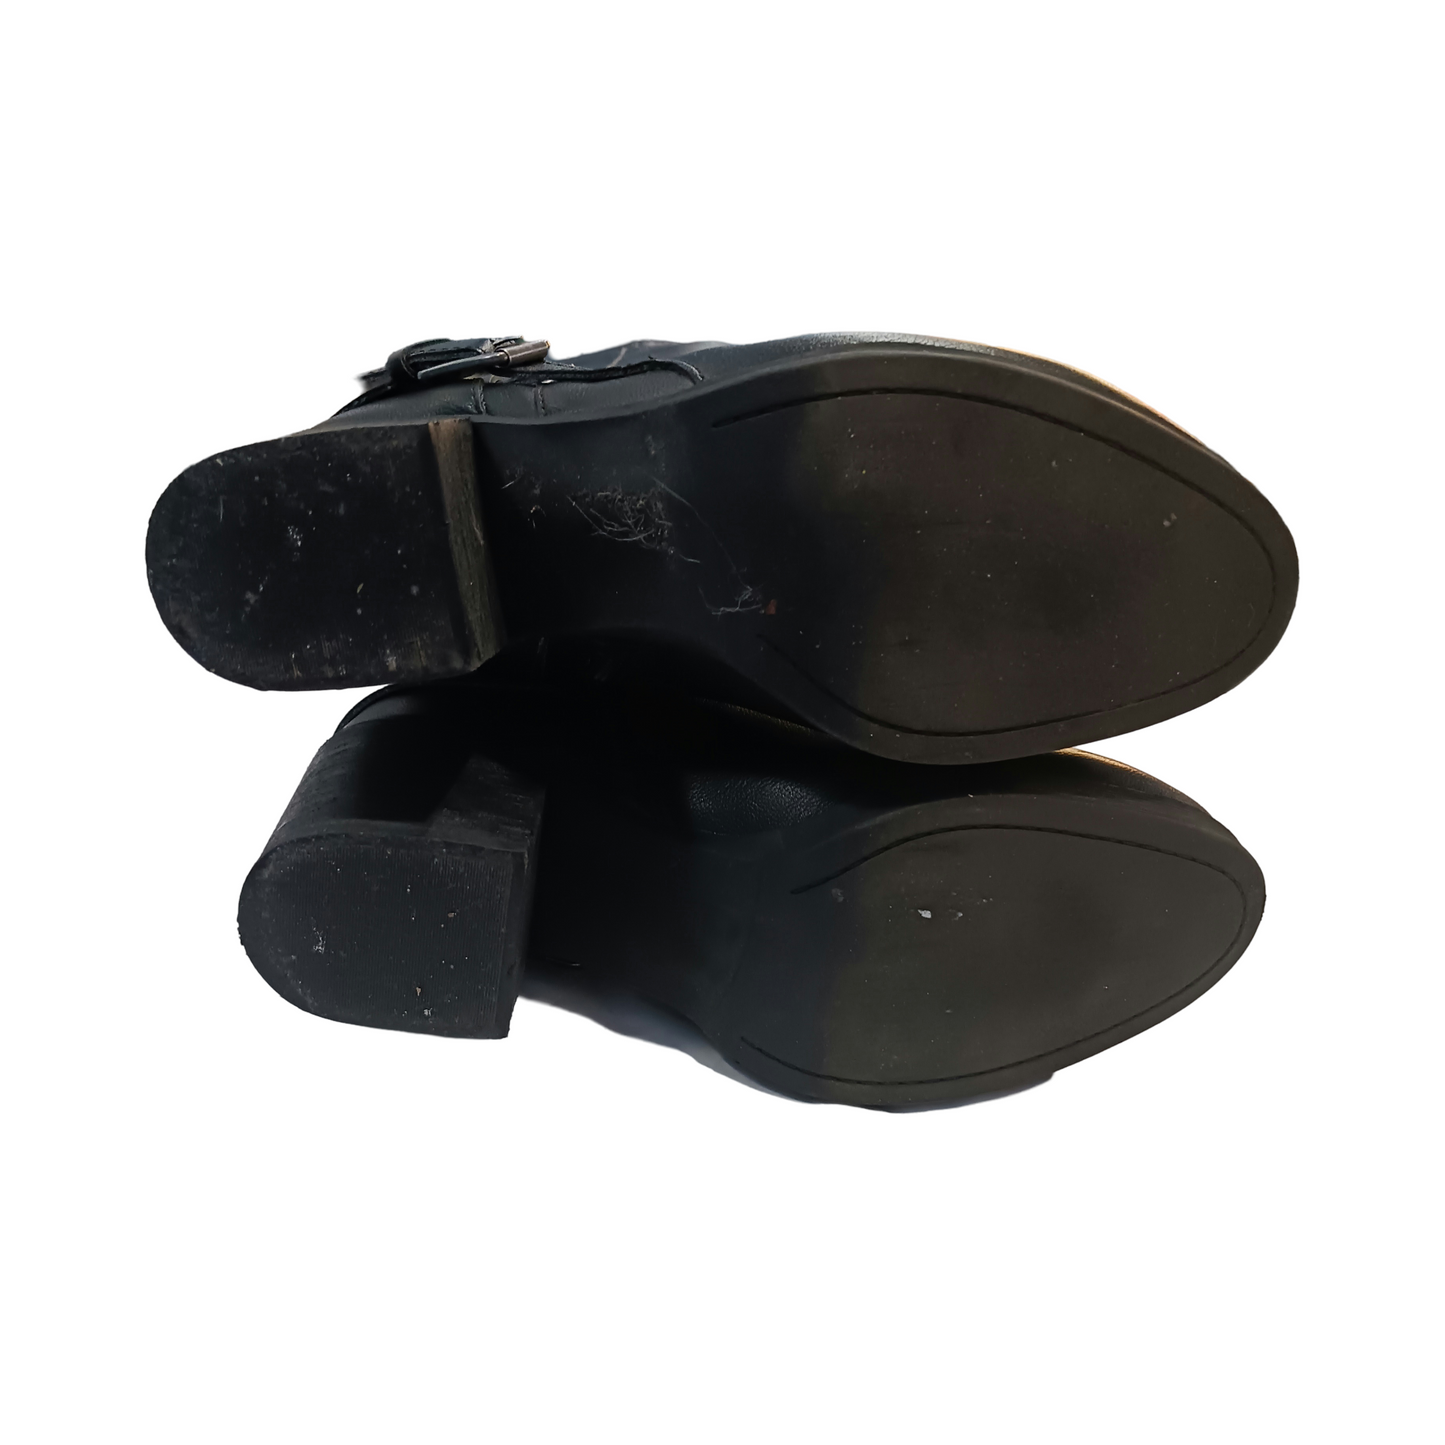 Steve Madden Black Gabrie Boots, Size 8.5M